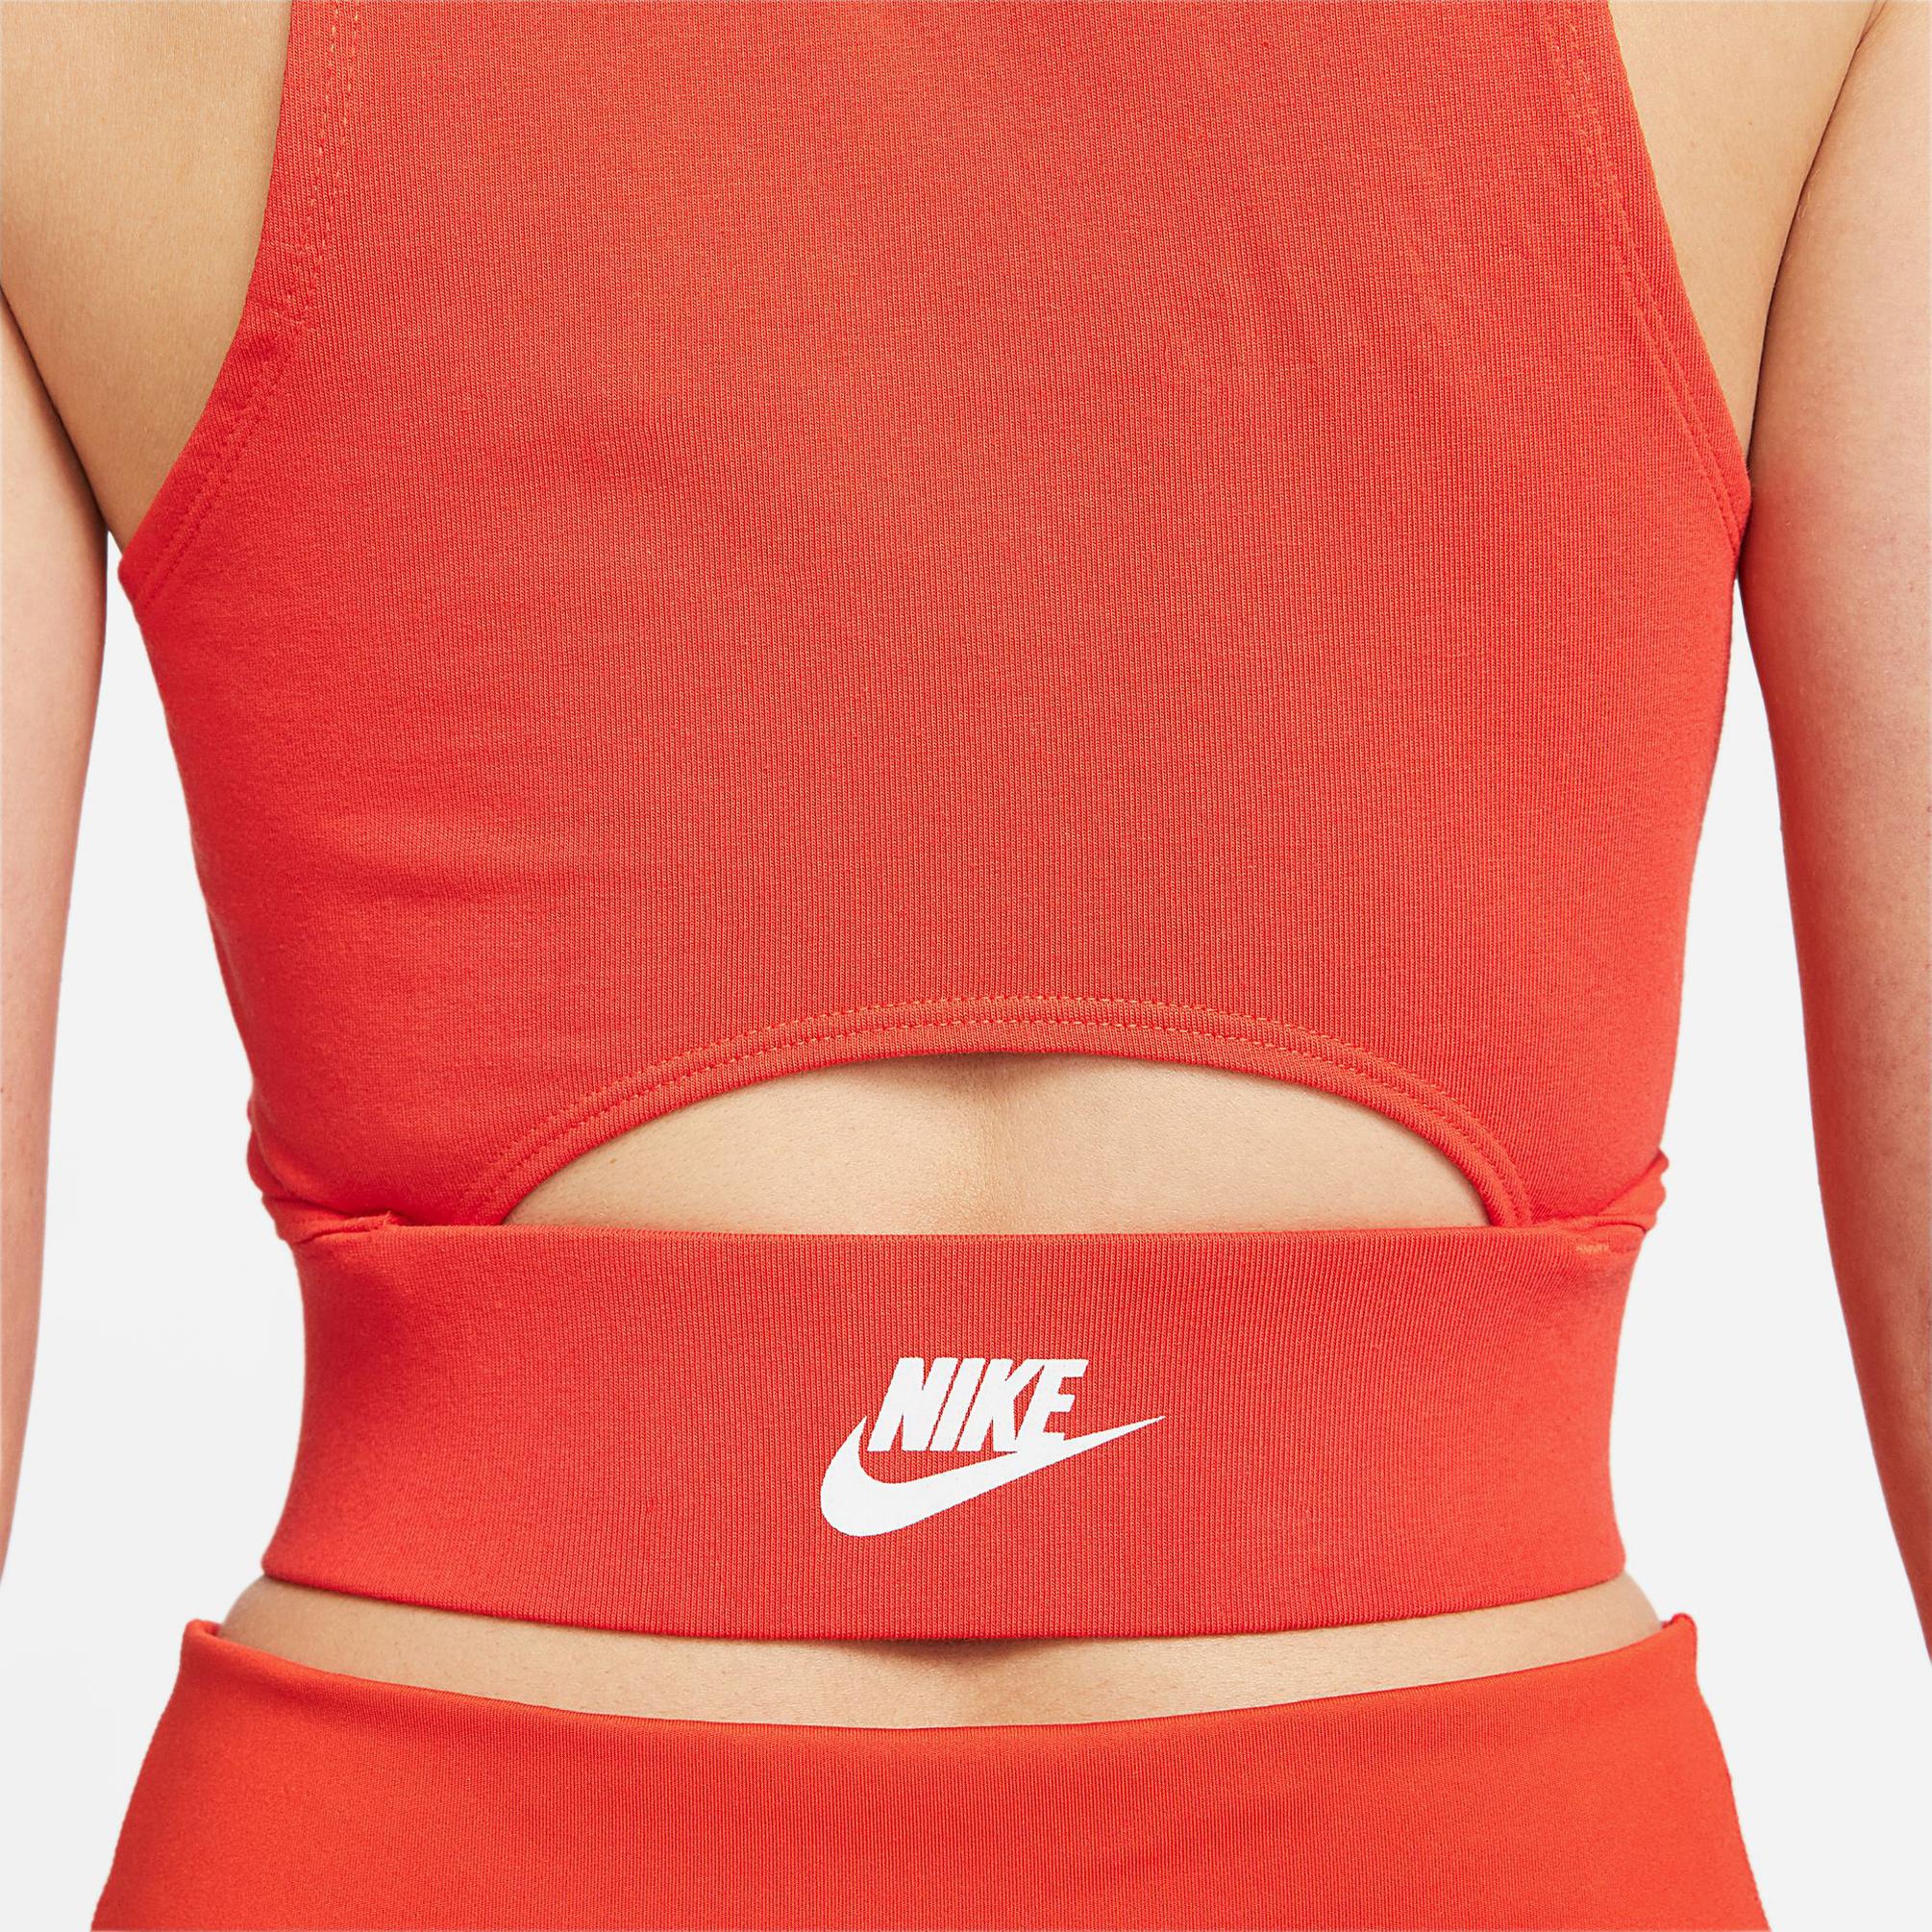  Nike Sportswear Tank Top Kadın Kırmızı T-Shirt